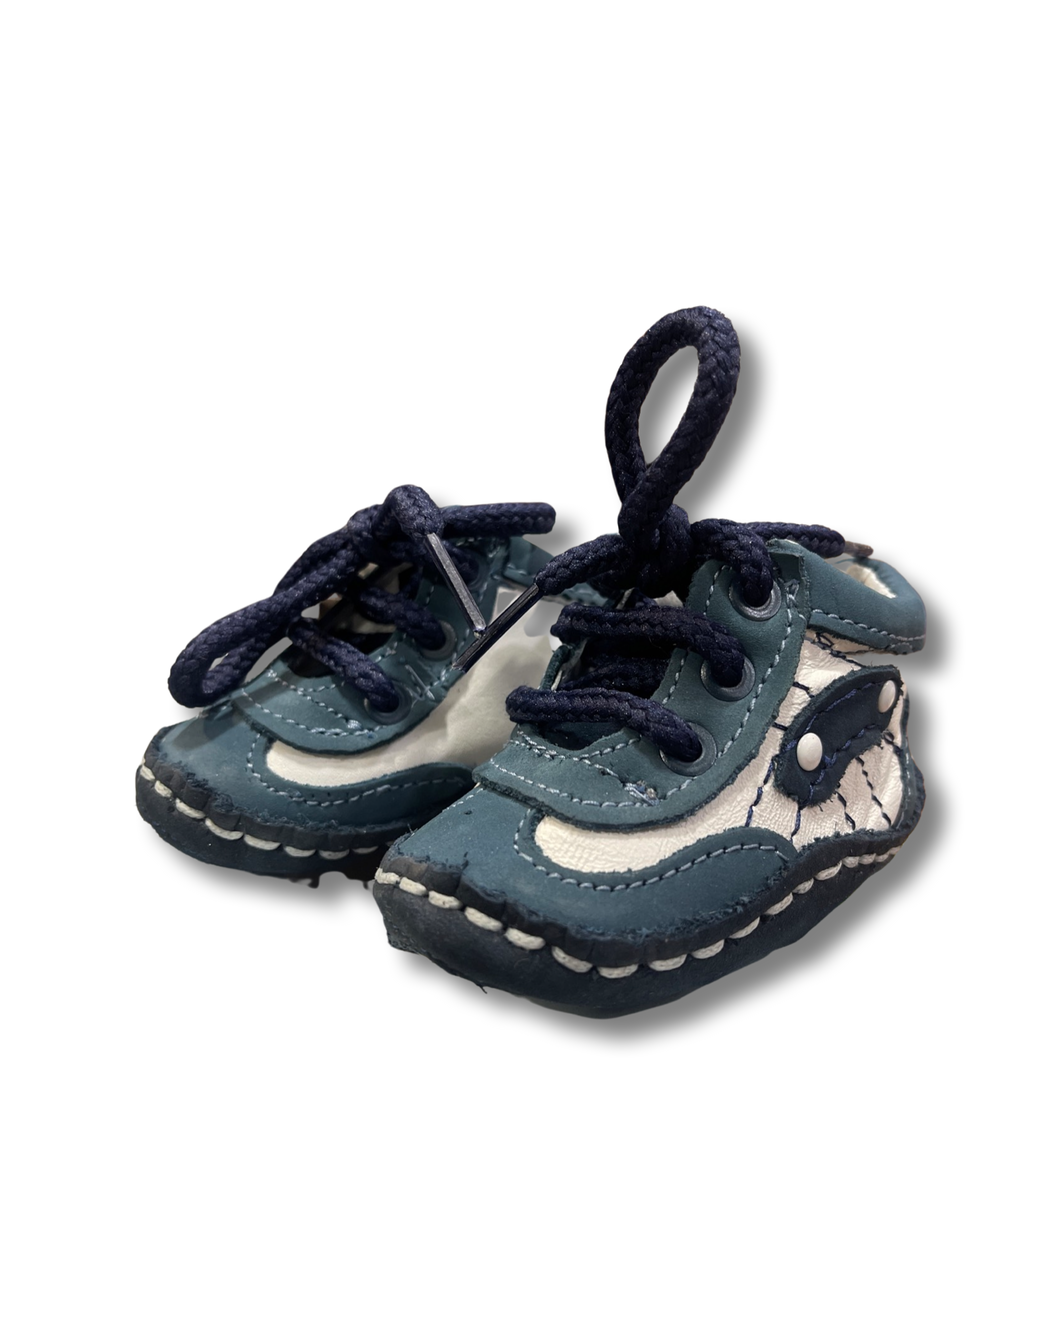 ABC Navy Blue/White Leather Kid Shoe